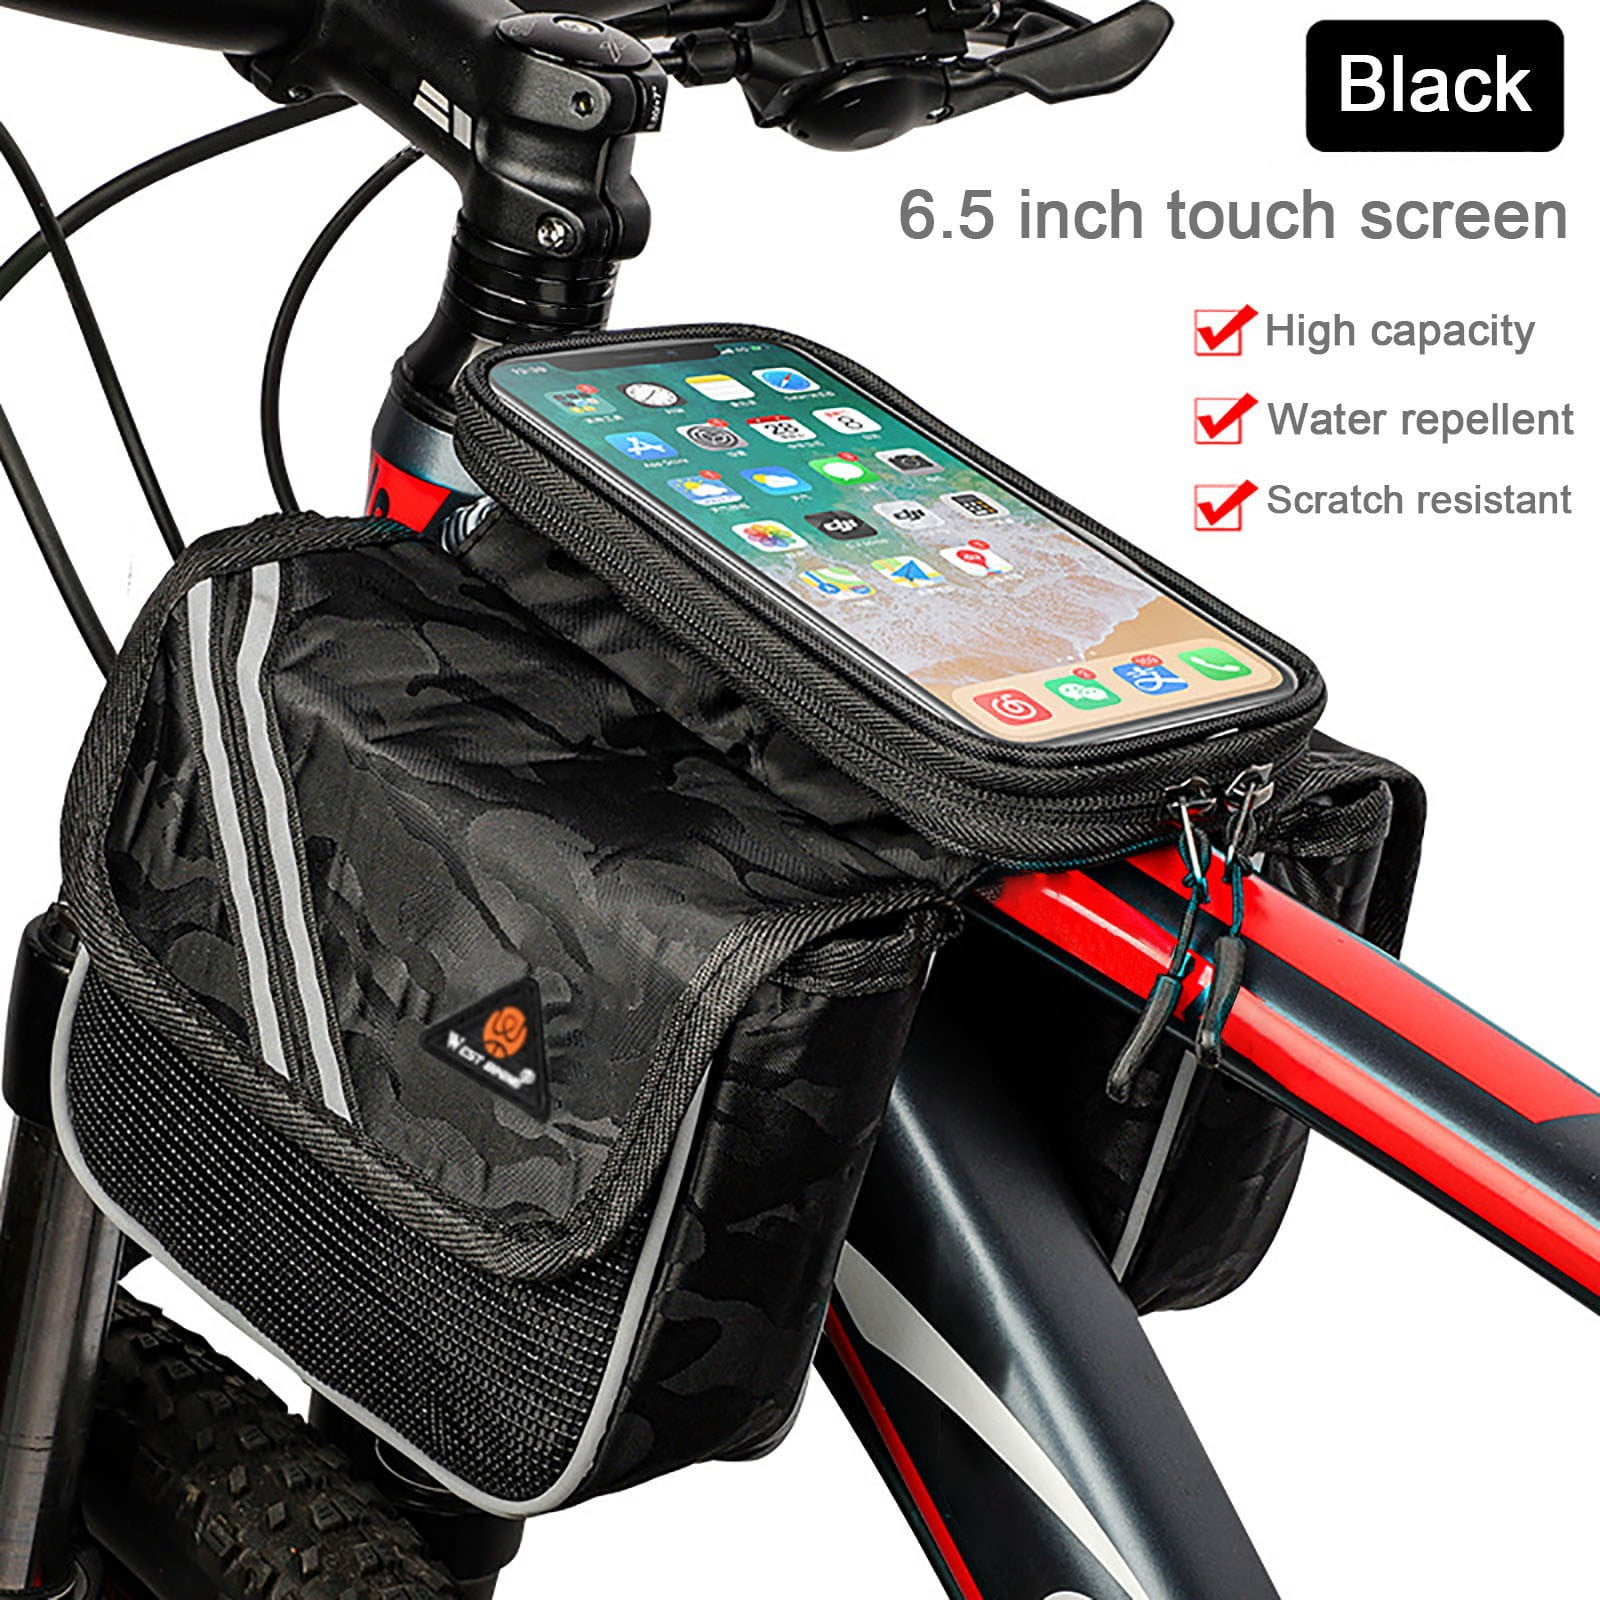 Bags | Bike accessories - OMNI Bikeparts